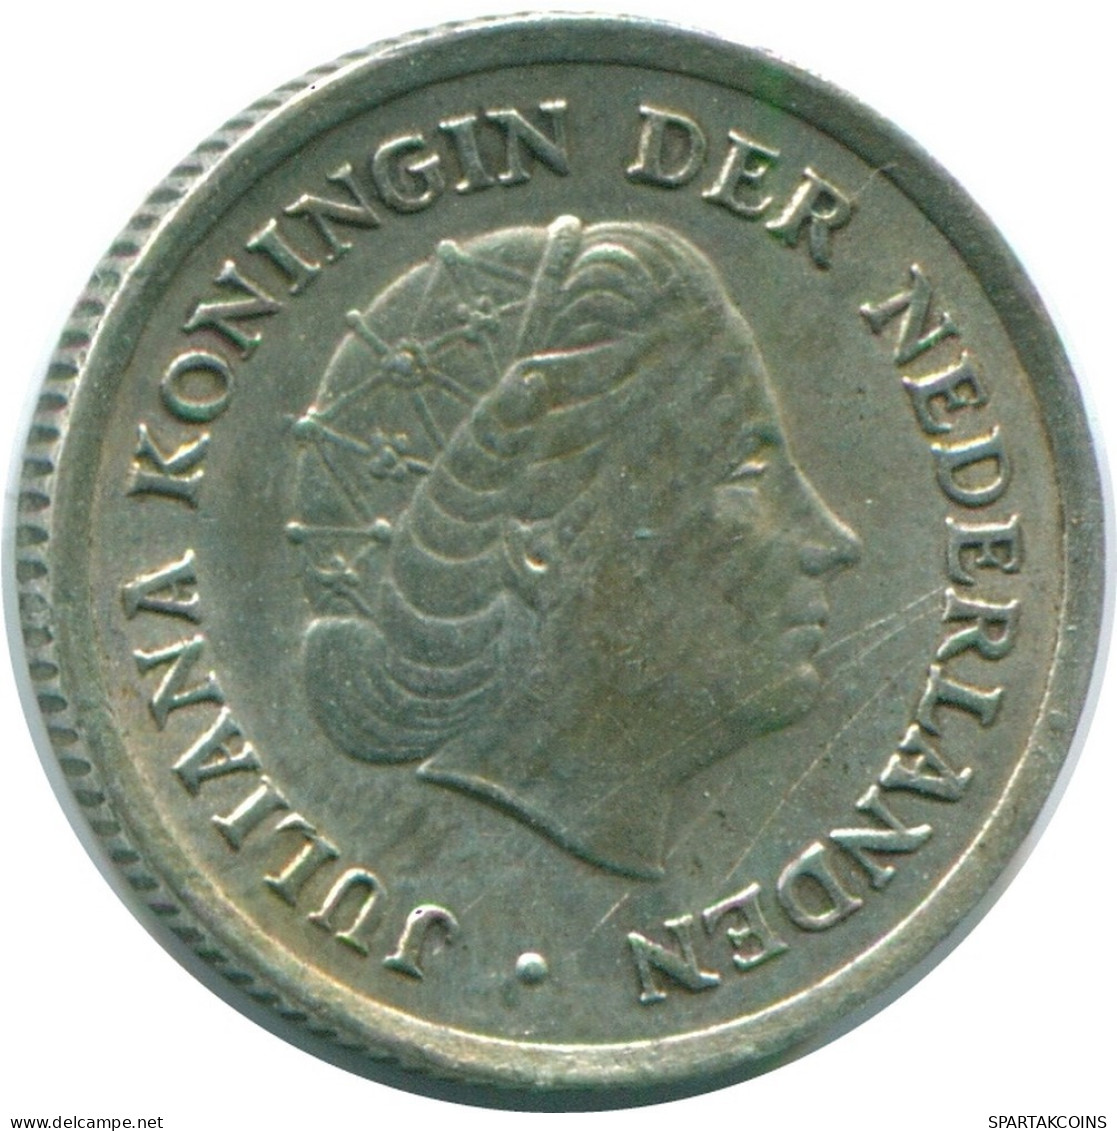 1/10 GULDEN 1966 NIEDERLÄNDISCHE ANTILLEN SILBER Koloniale Münze #NL12768.3.D.A - Netherlands Antilles